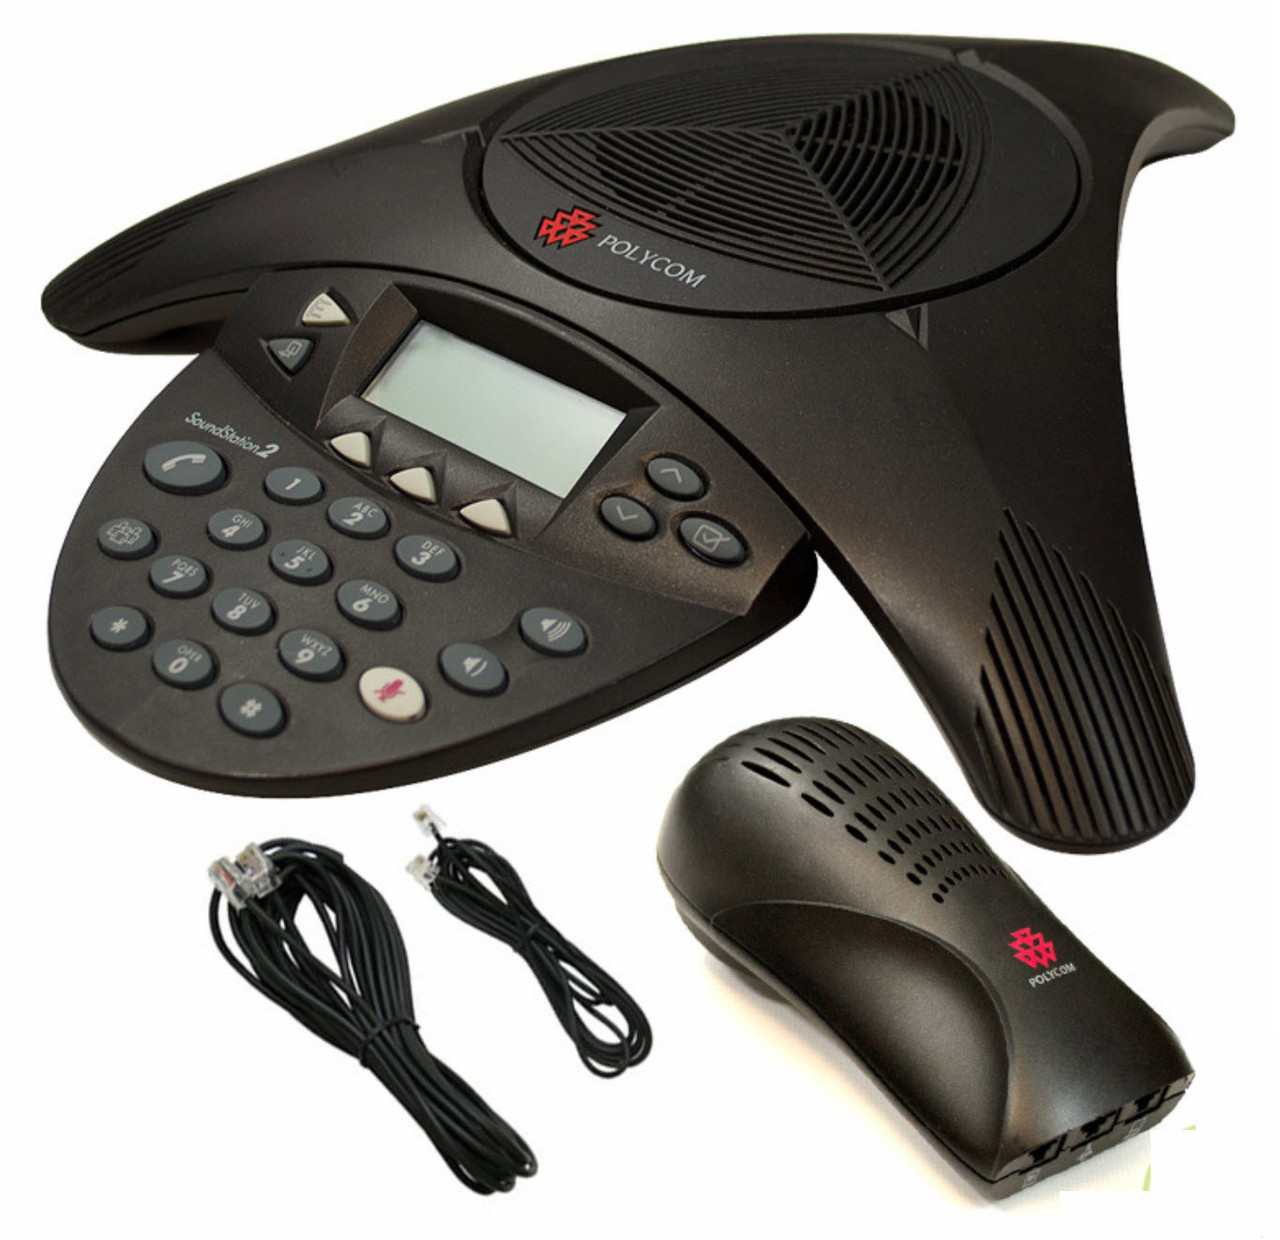 Polycom SoundStation 2w 1.9 EX Conference Phone Units for sale online 